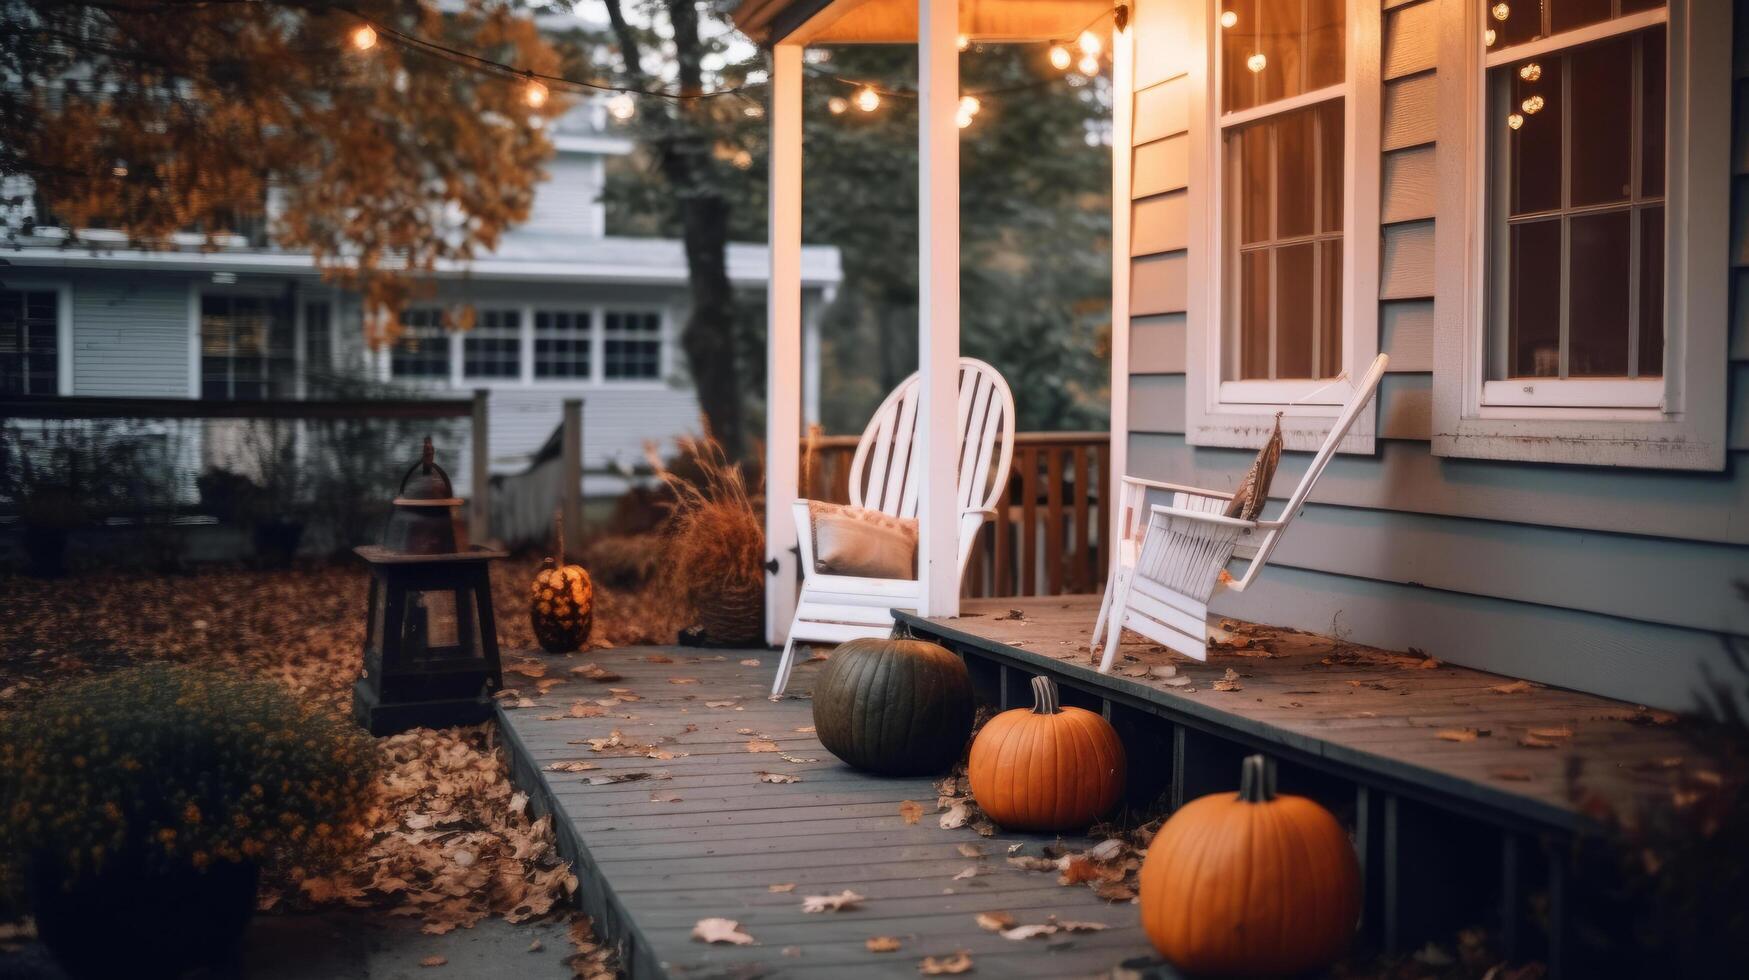 Autumn cozy outdoor background. Illustration photo